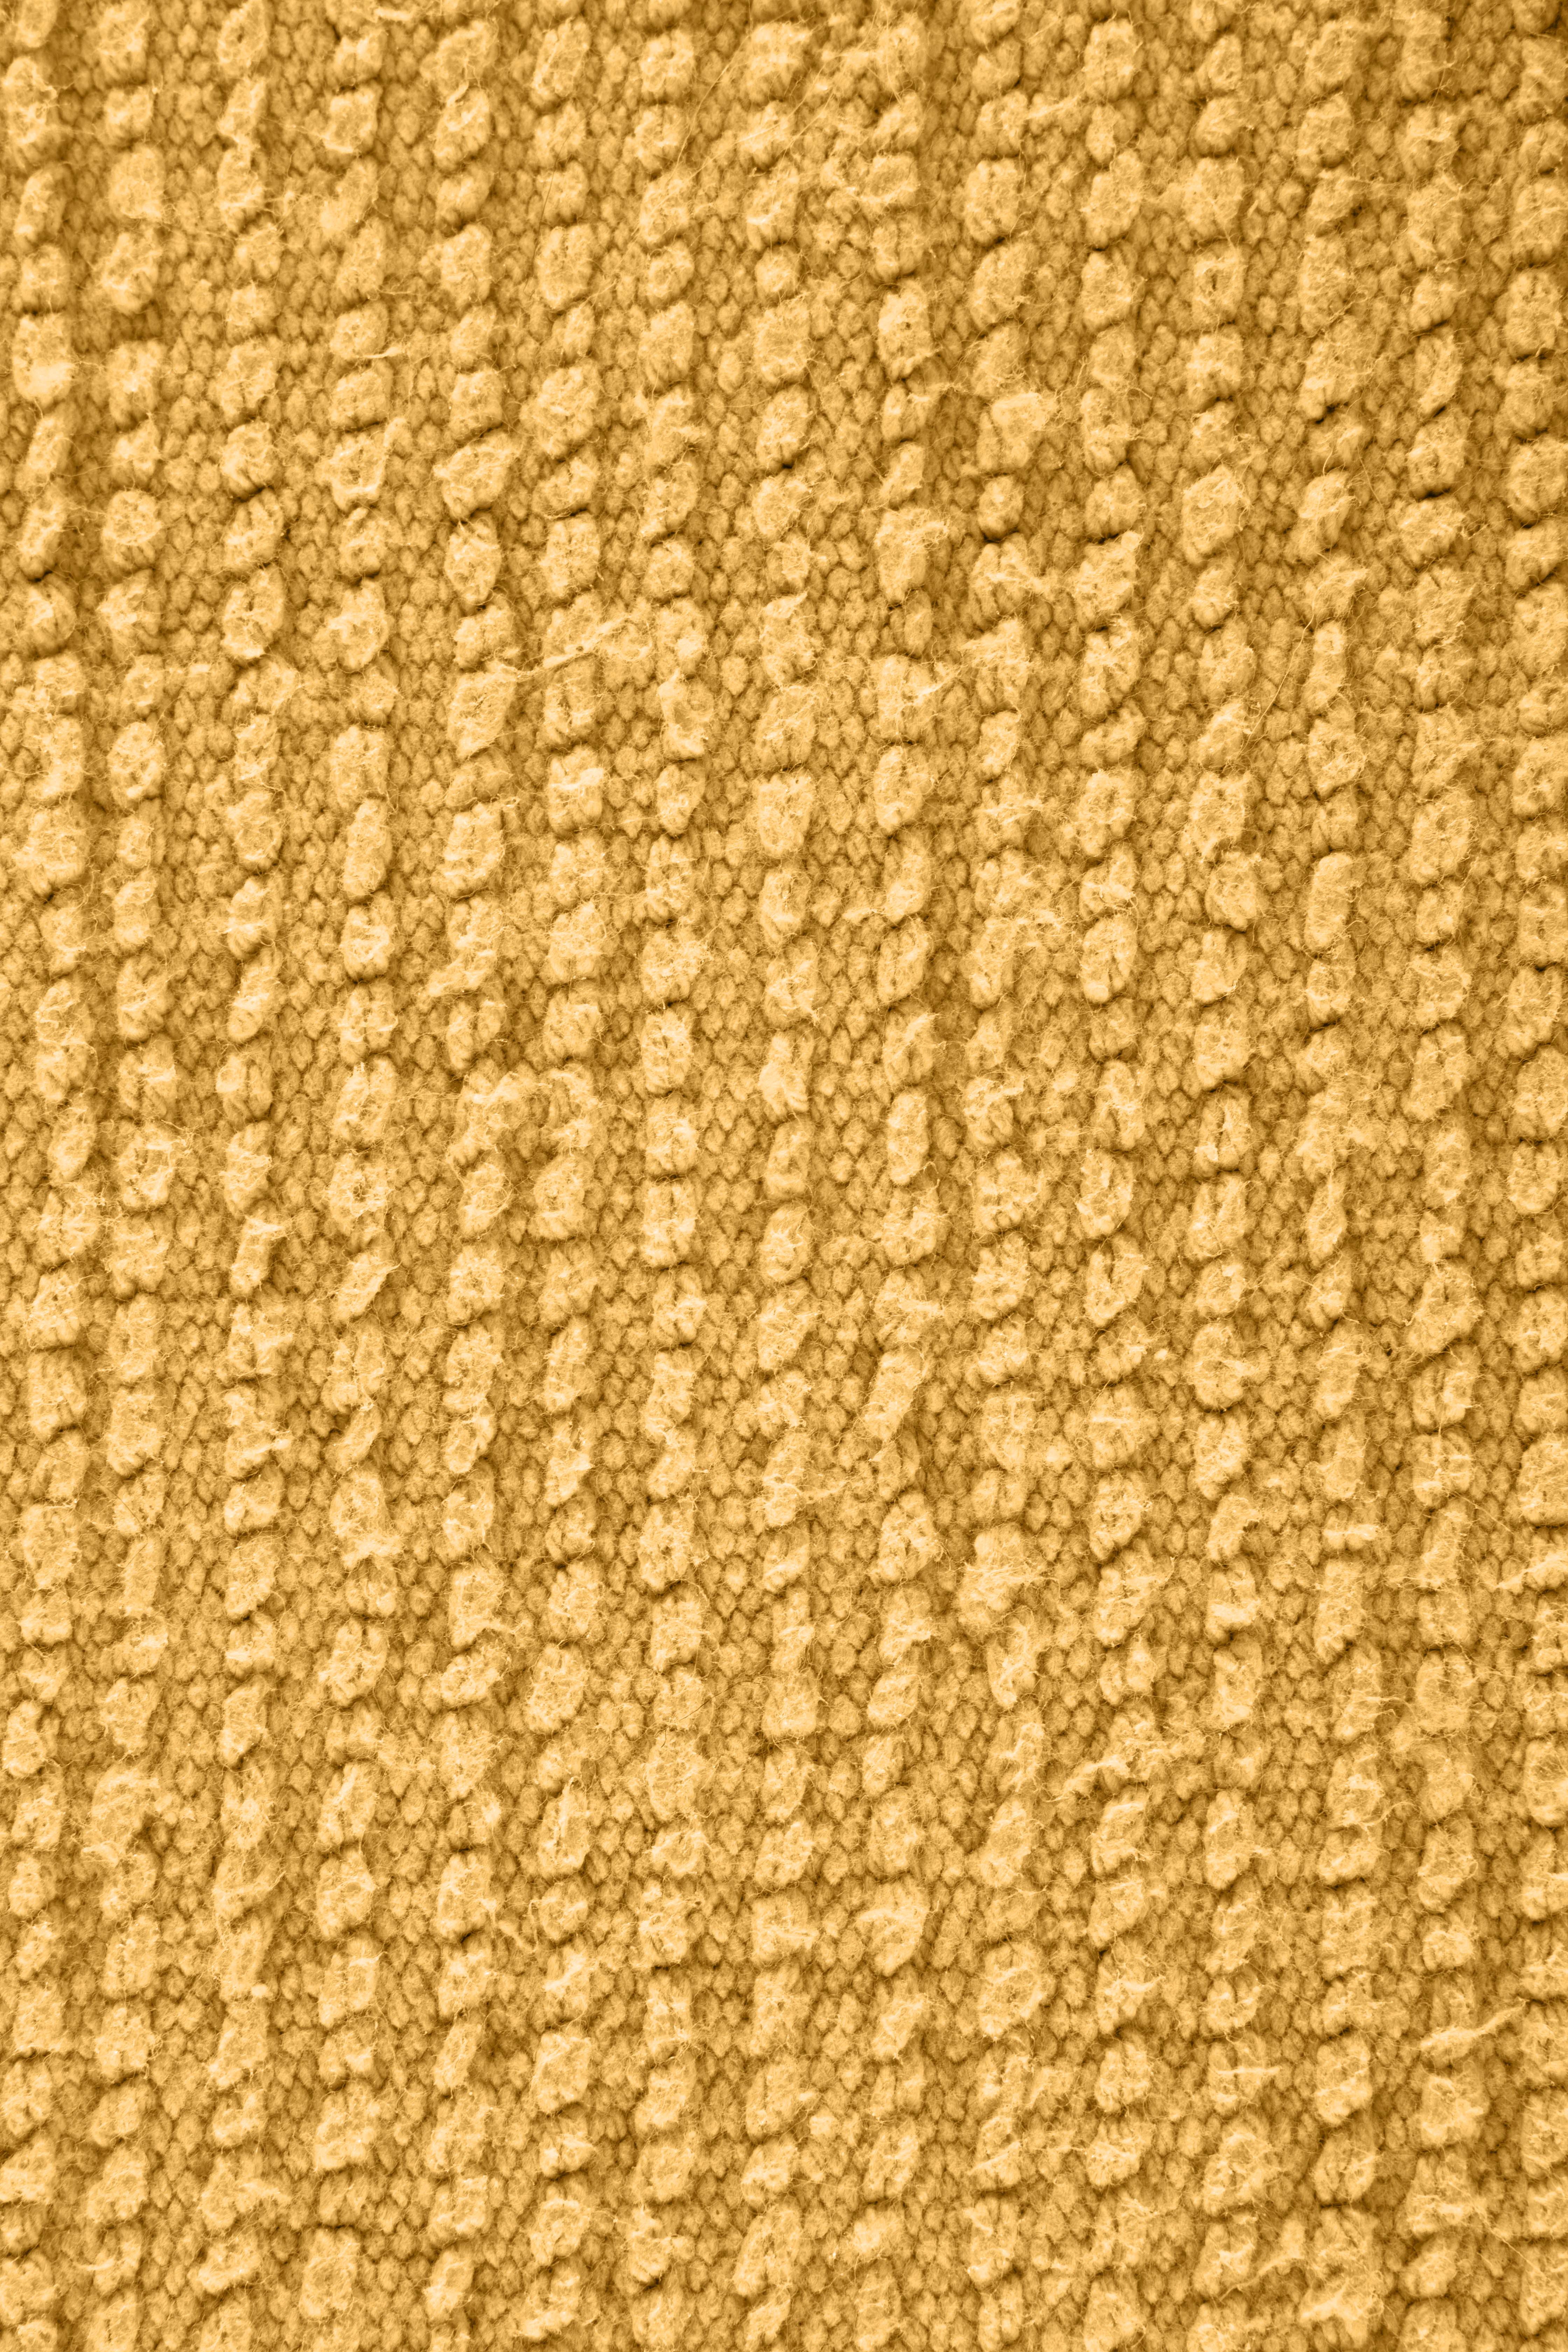 RIVA bath carpet - cotton anti-slip, 60x60cm, sunflower yellow